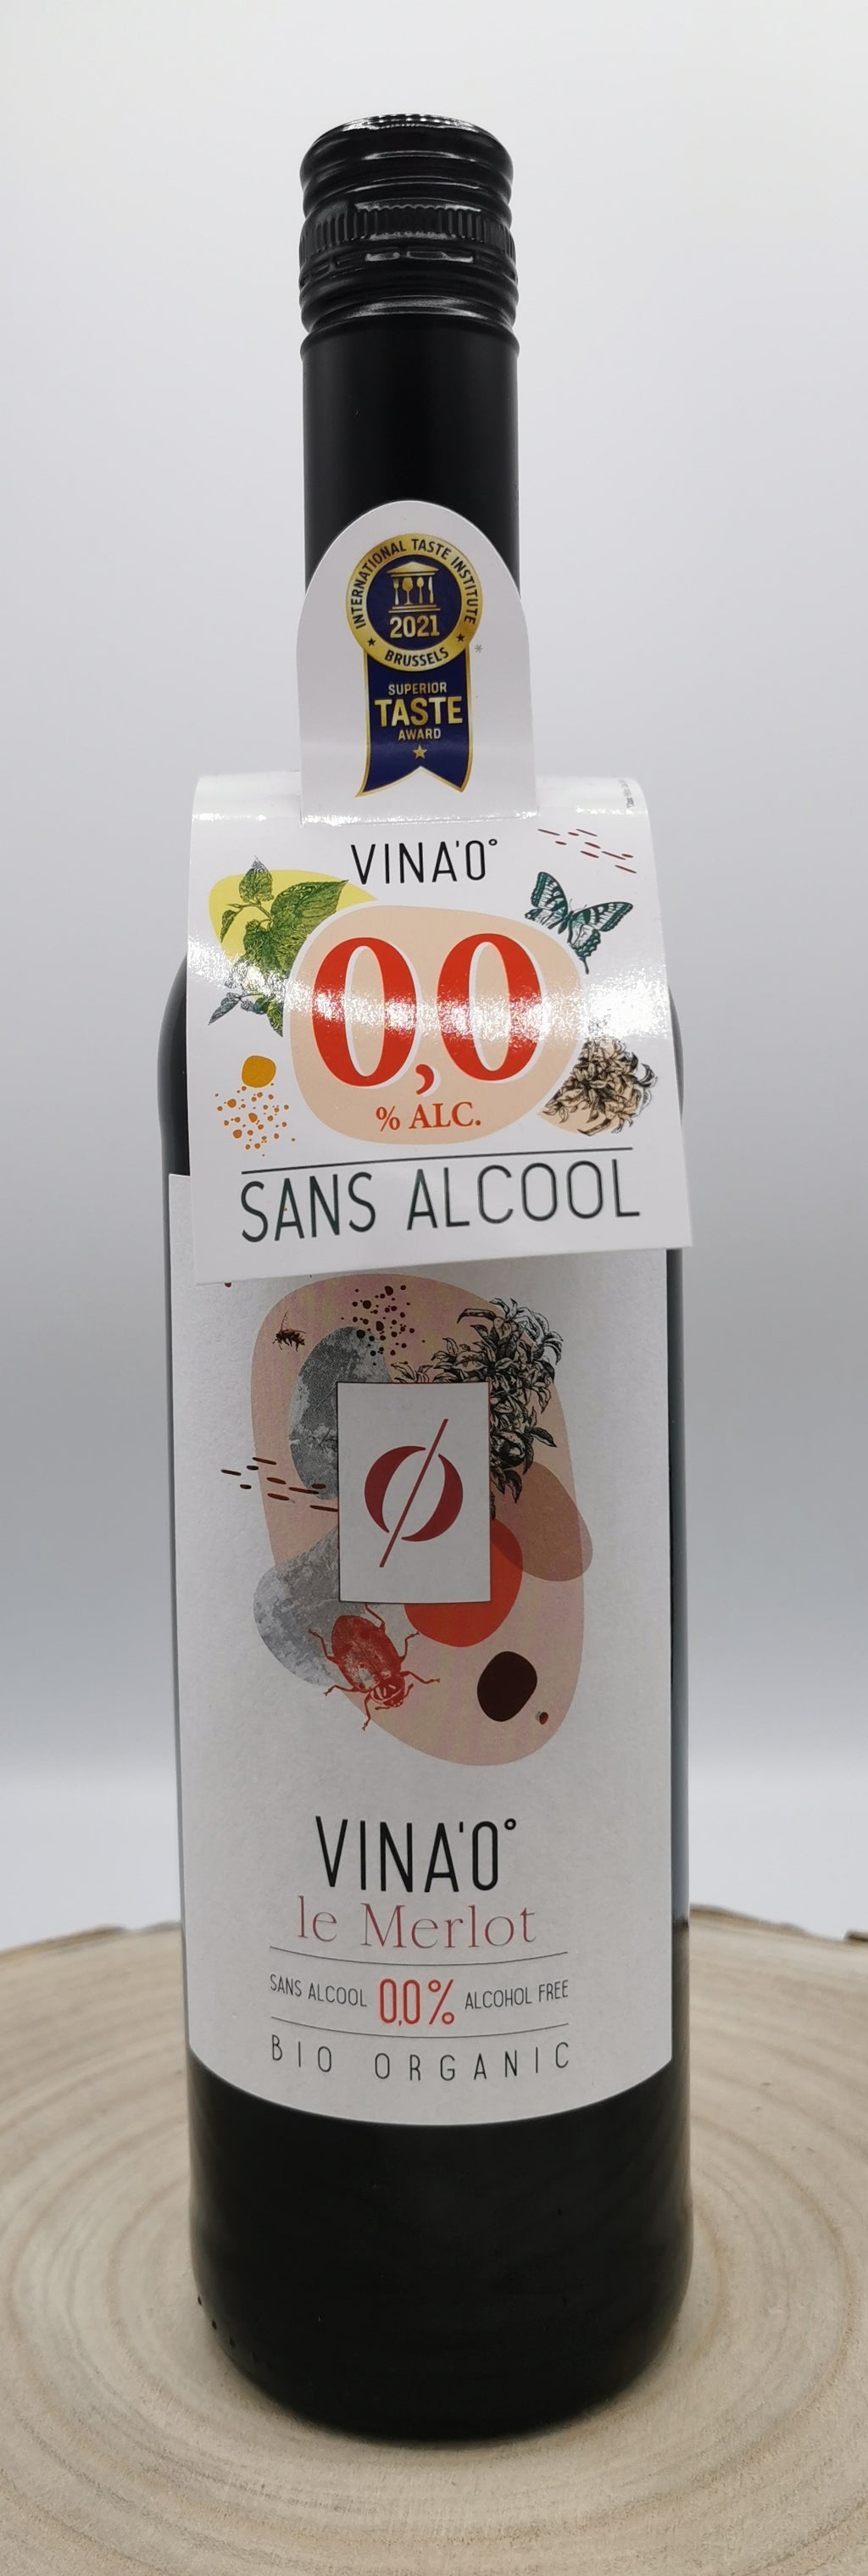 Appalina - Vin Rouge désalcoolisé - sans Alcool - Merlot (6 x 0,75